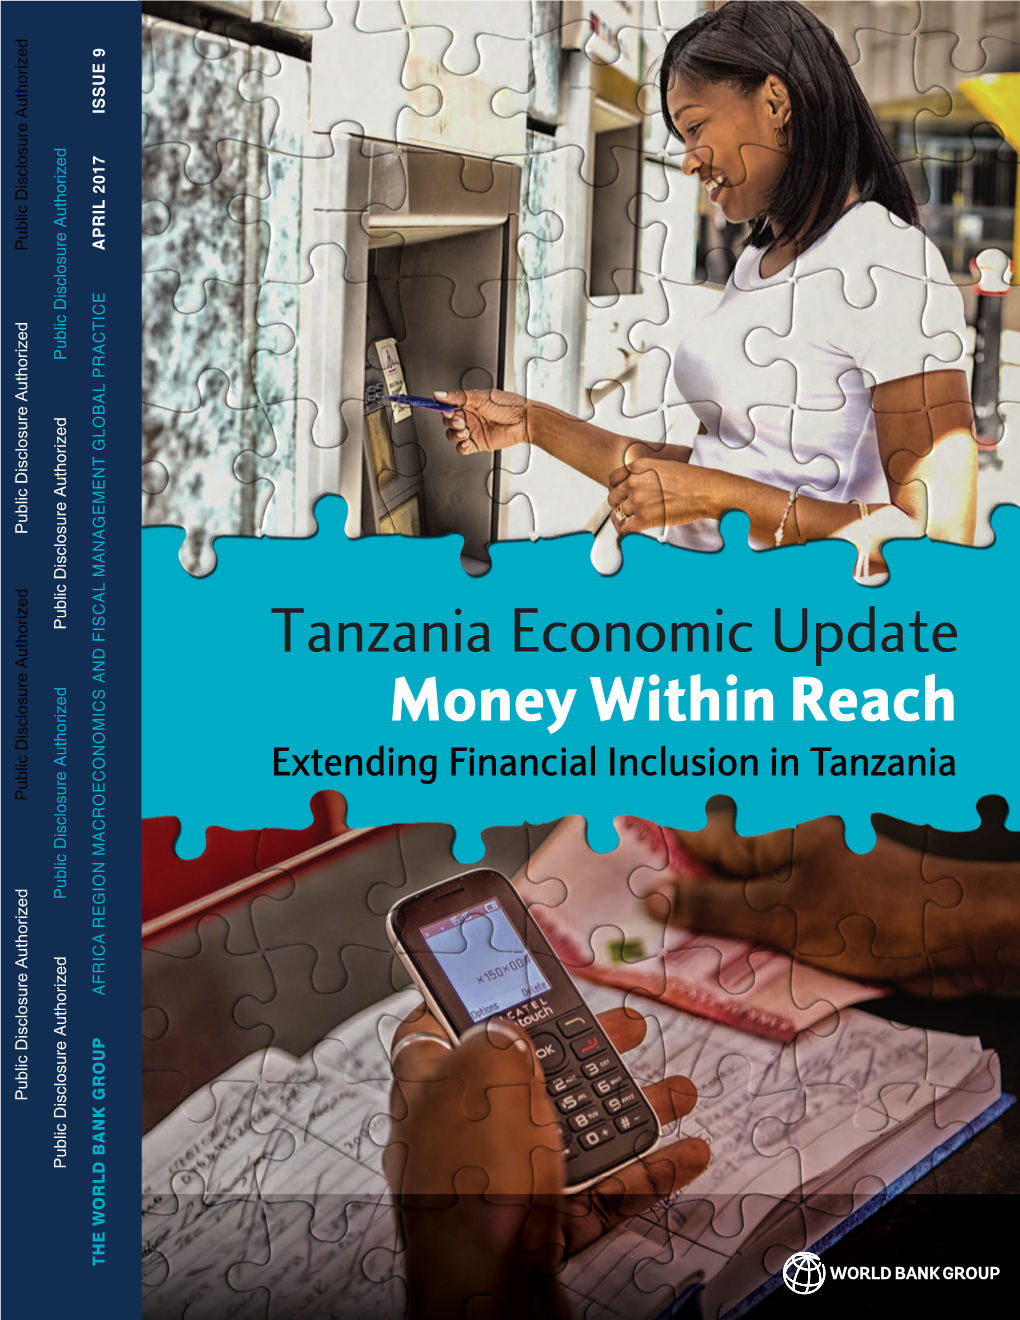 Extending Financial Inclusion in Tanzania